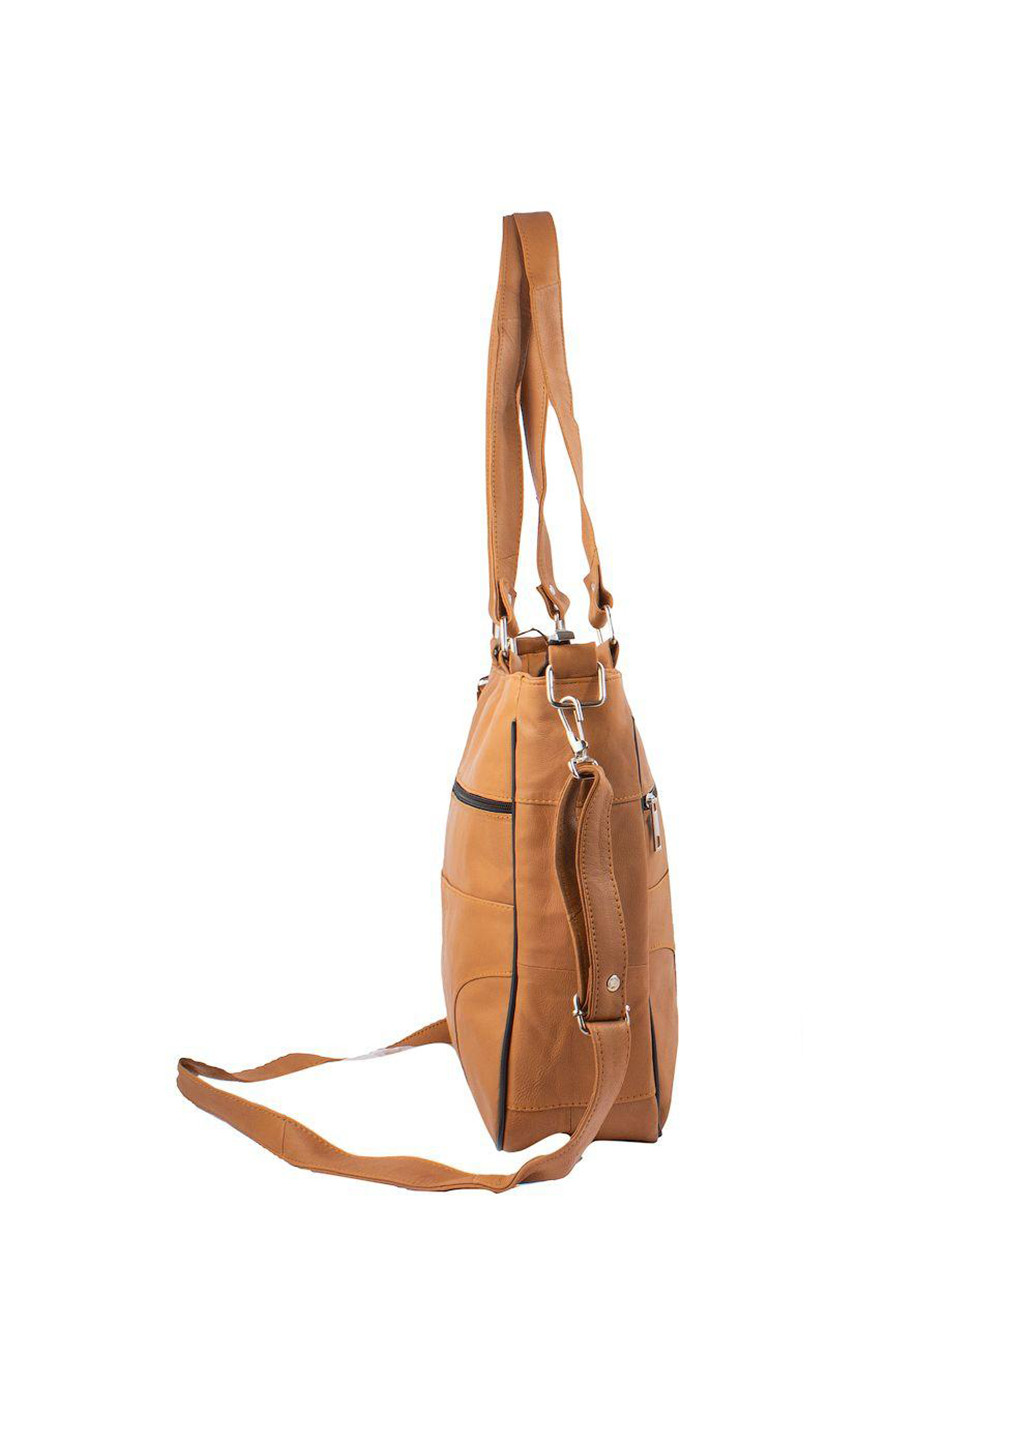 Жіноча шкіряна сумка-шоппер 34х28х10 см TuNoNa (232989139)